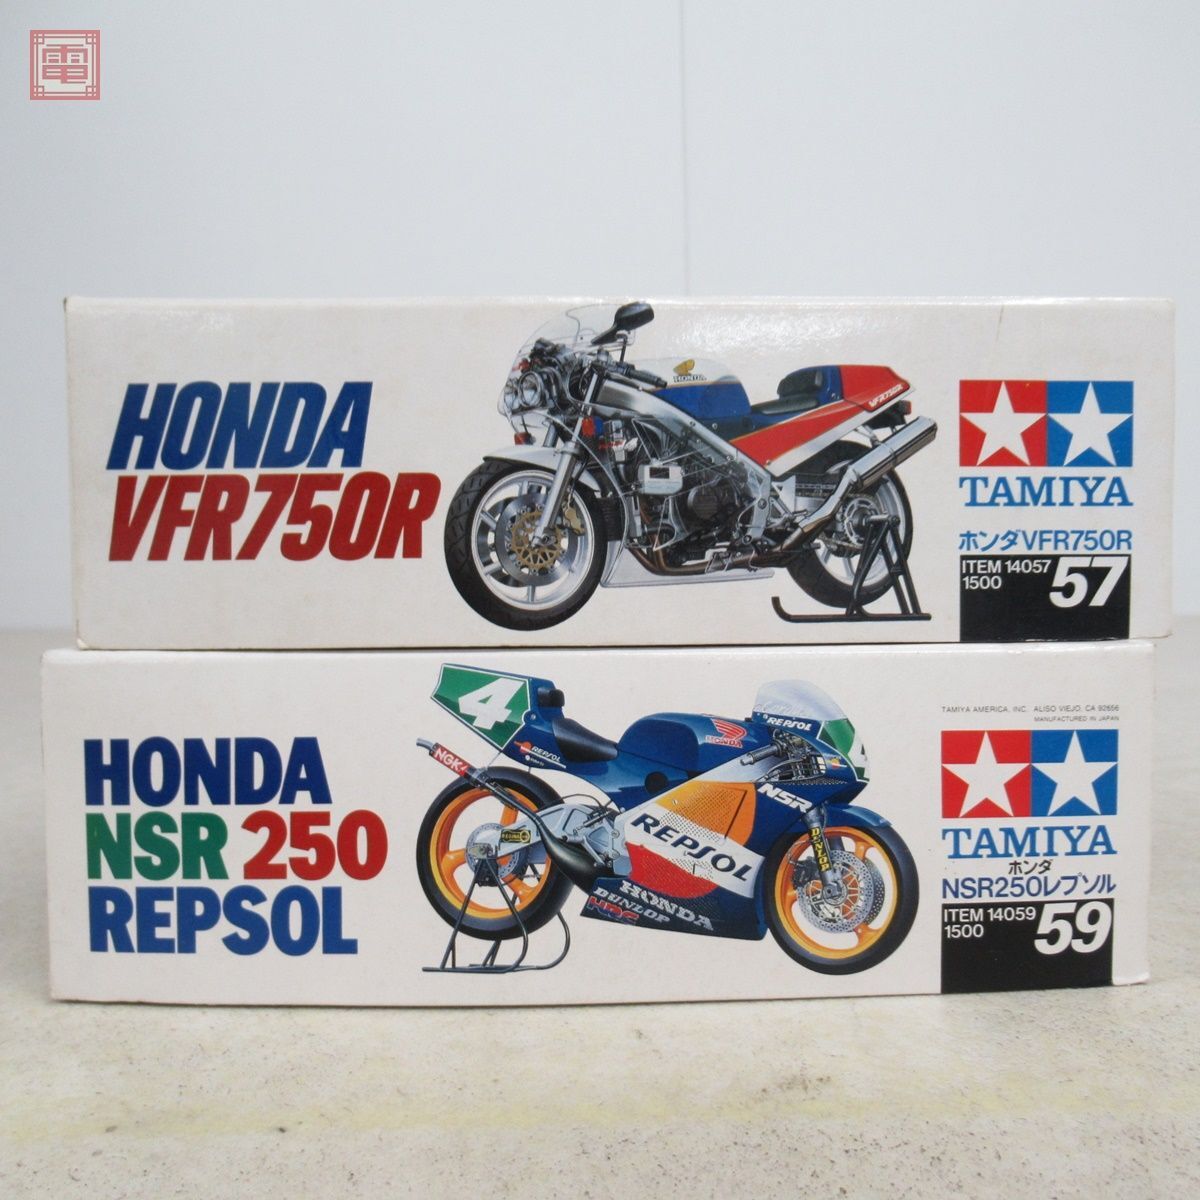  не собран Tamiya 1/12 Honda 250 Repsol / Honda VFR750R совместно 2 шт. комплект мотоцикл серии TAMIYA HONDA[20